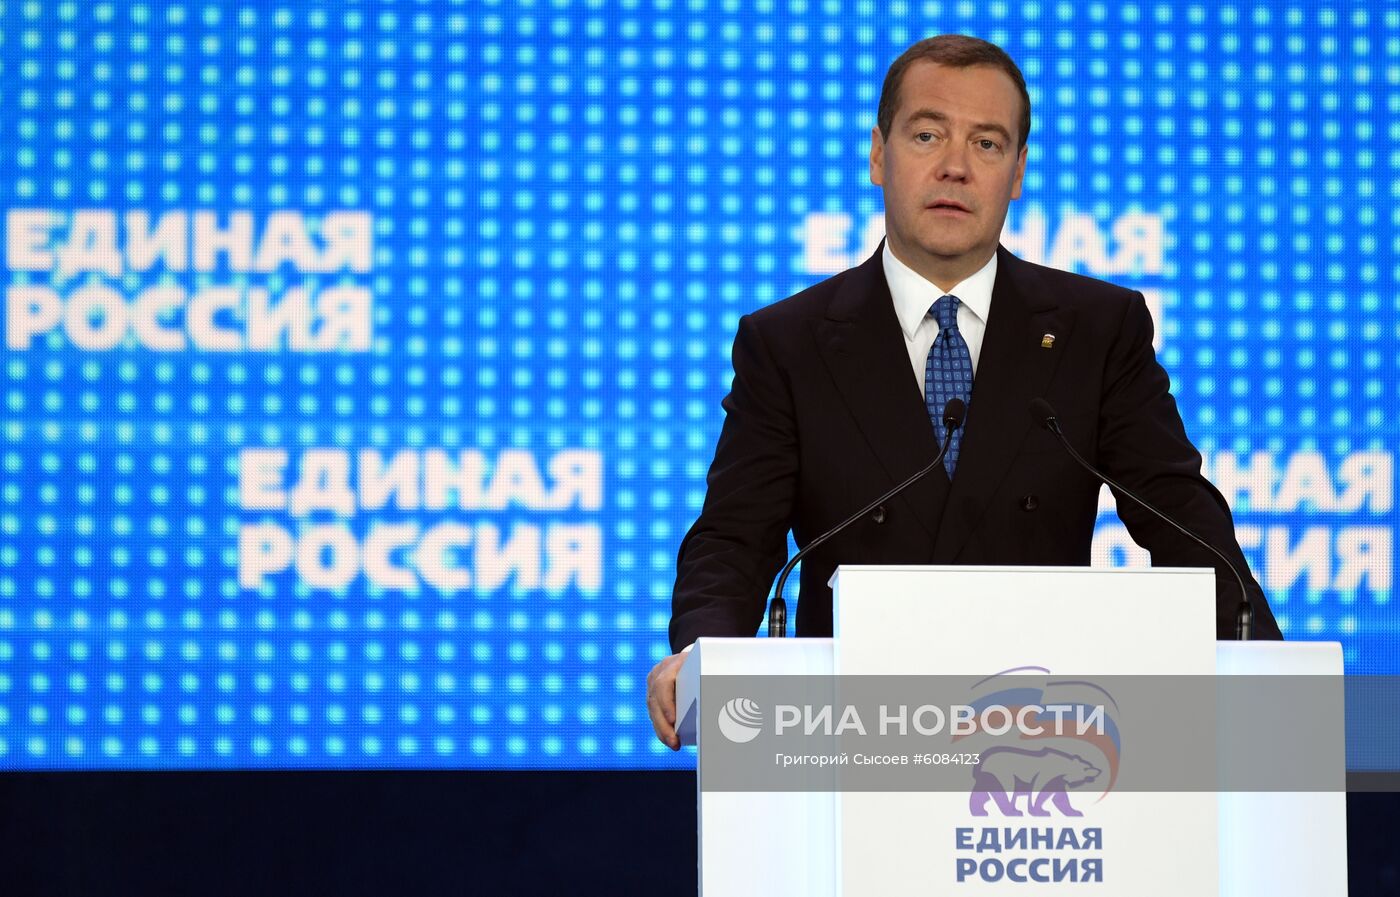 Президент РФ В. Путин и премьер-министр РФ Д. Медведев приняли участие в съезде партии "Единая Россия"